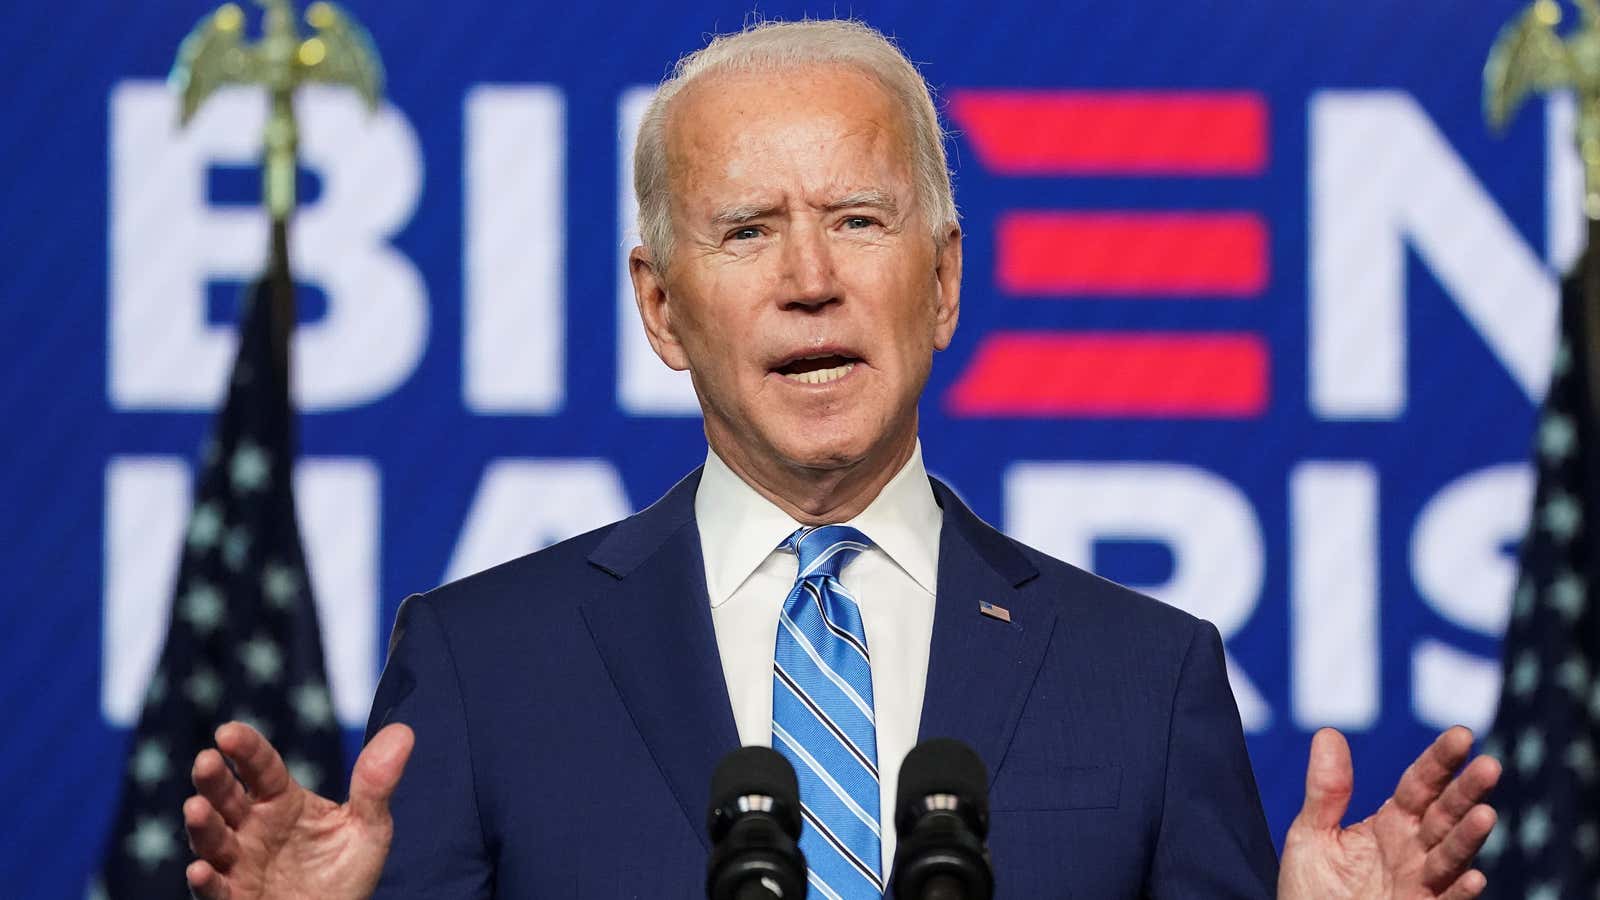 America’s choice for president: Joe Biden